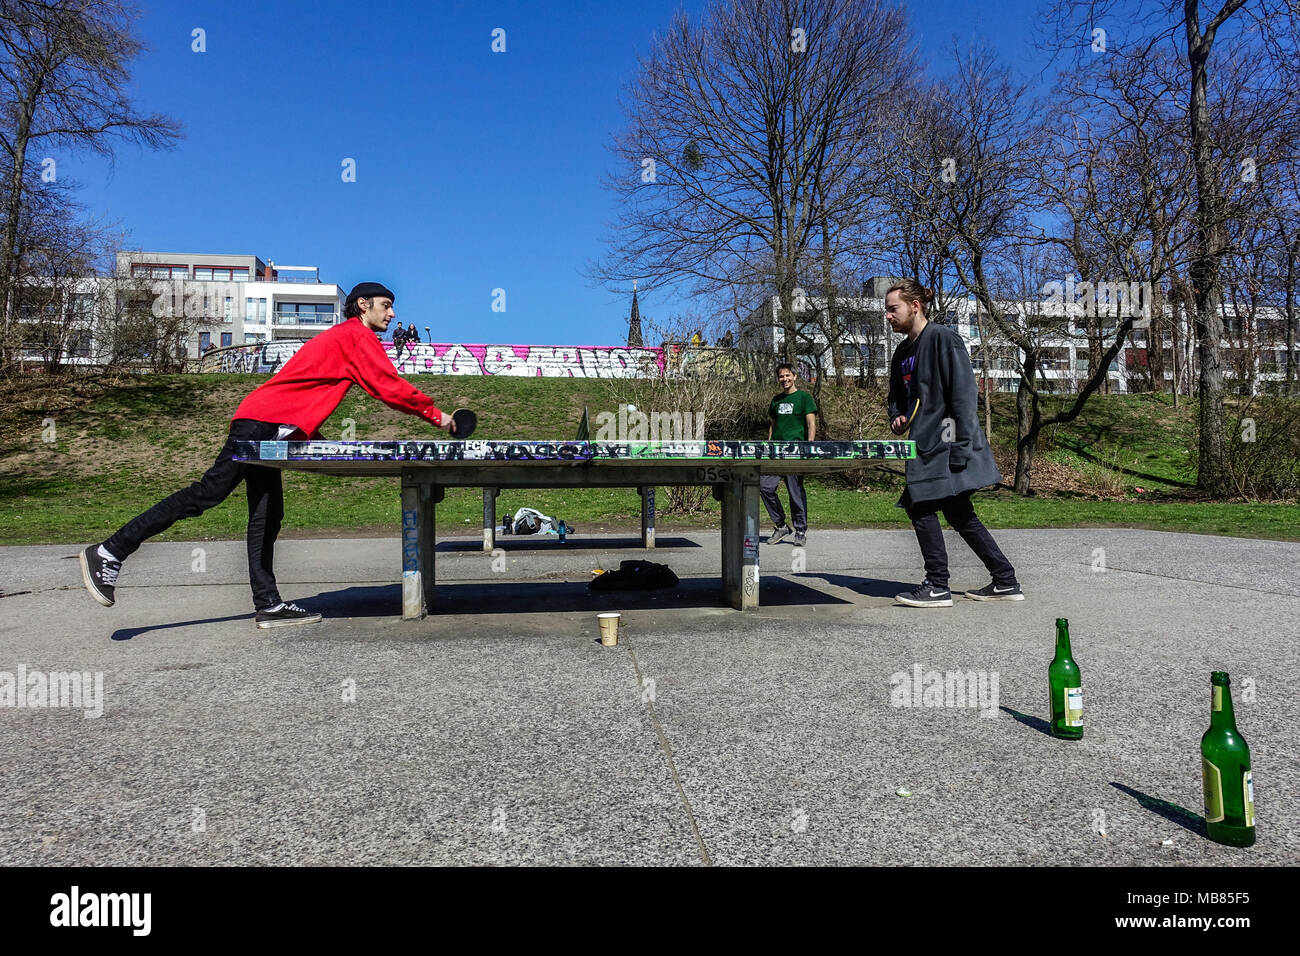 Young boys play table tennis. Alaunplatz Park, City garden, Dresden Neustadt Germany daily life, Europe Stock Photo